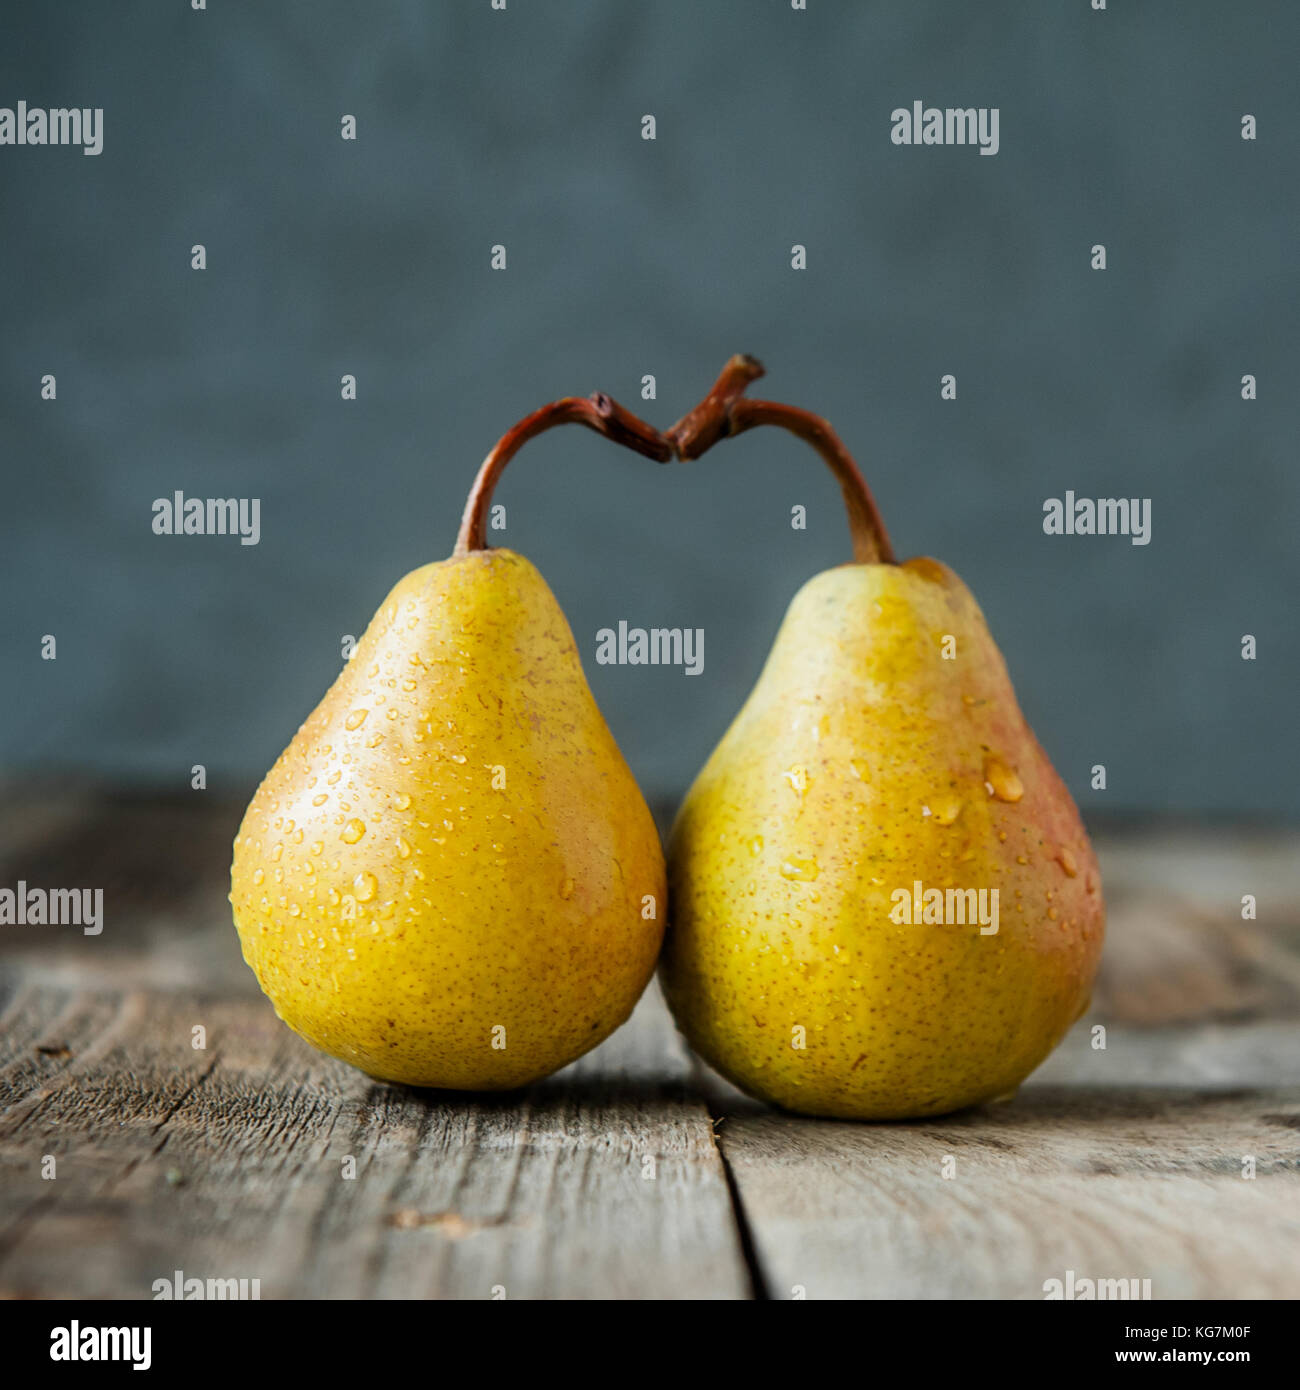 https://c8.alamy.com/comp/KG7M0F/a-couple-of-fresh-ripe-organic-yellow-pears-form-the-shape-of-the-KG7M0F.jpg